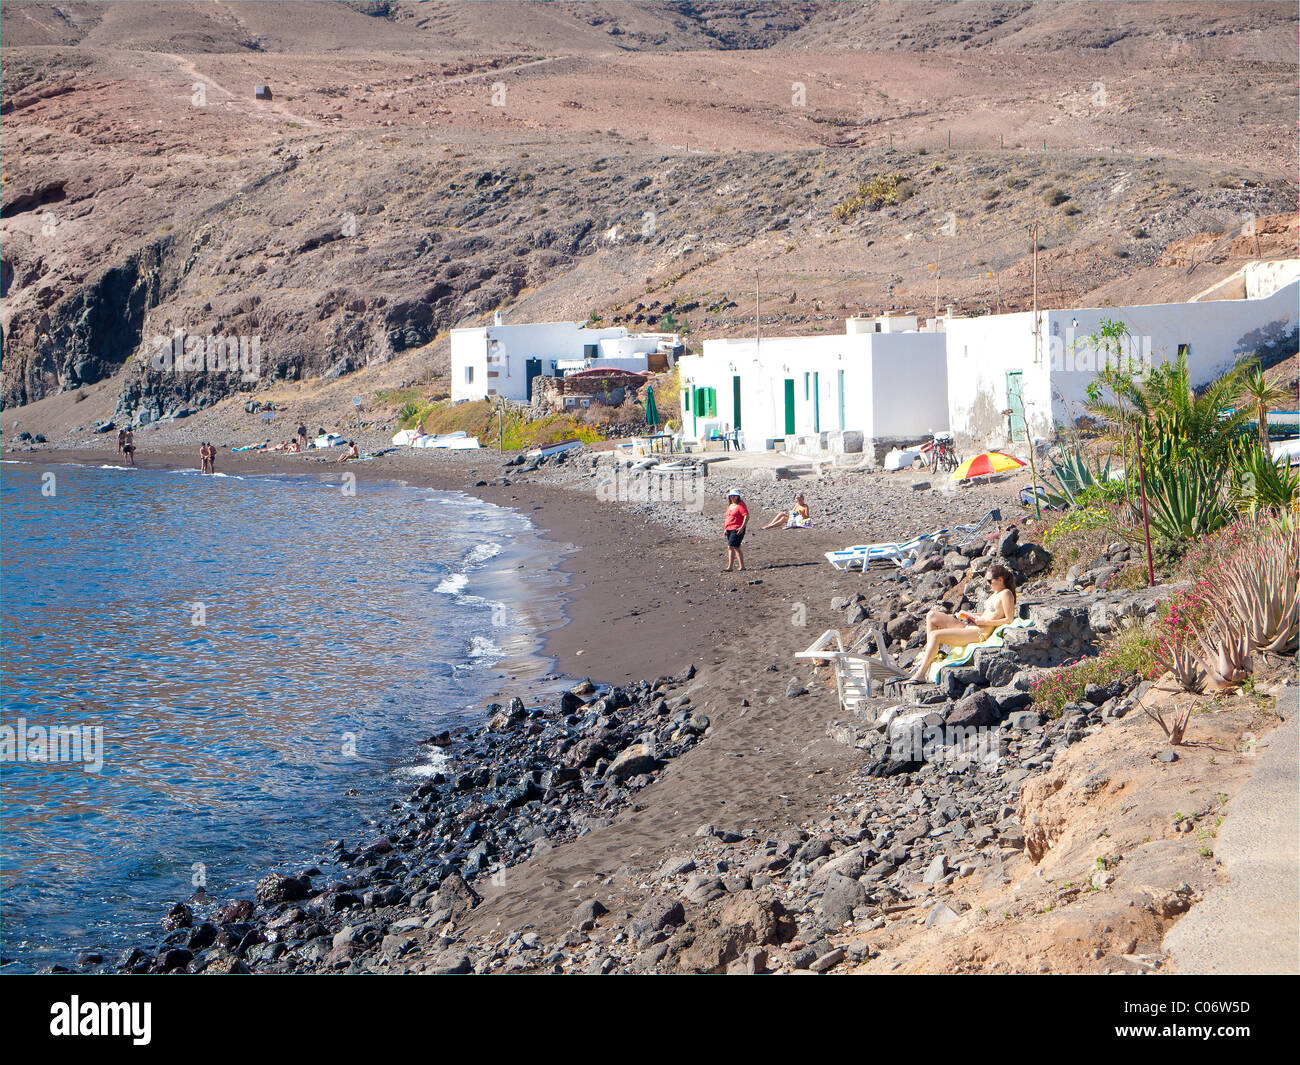 La plage dans le petit village de Playa Quemada Lanzarote Banque D'Images